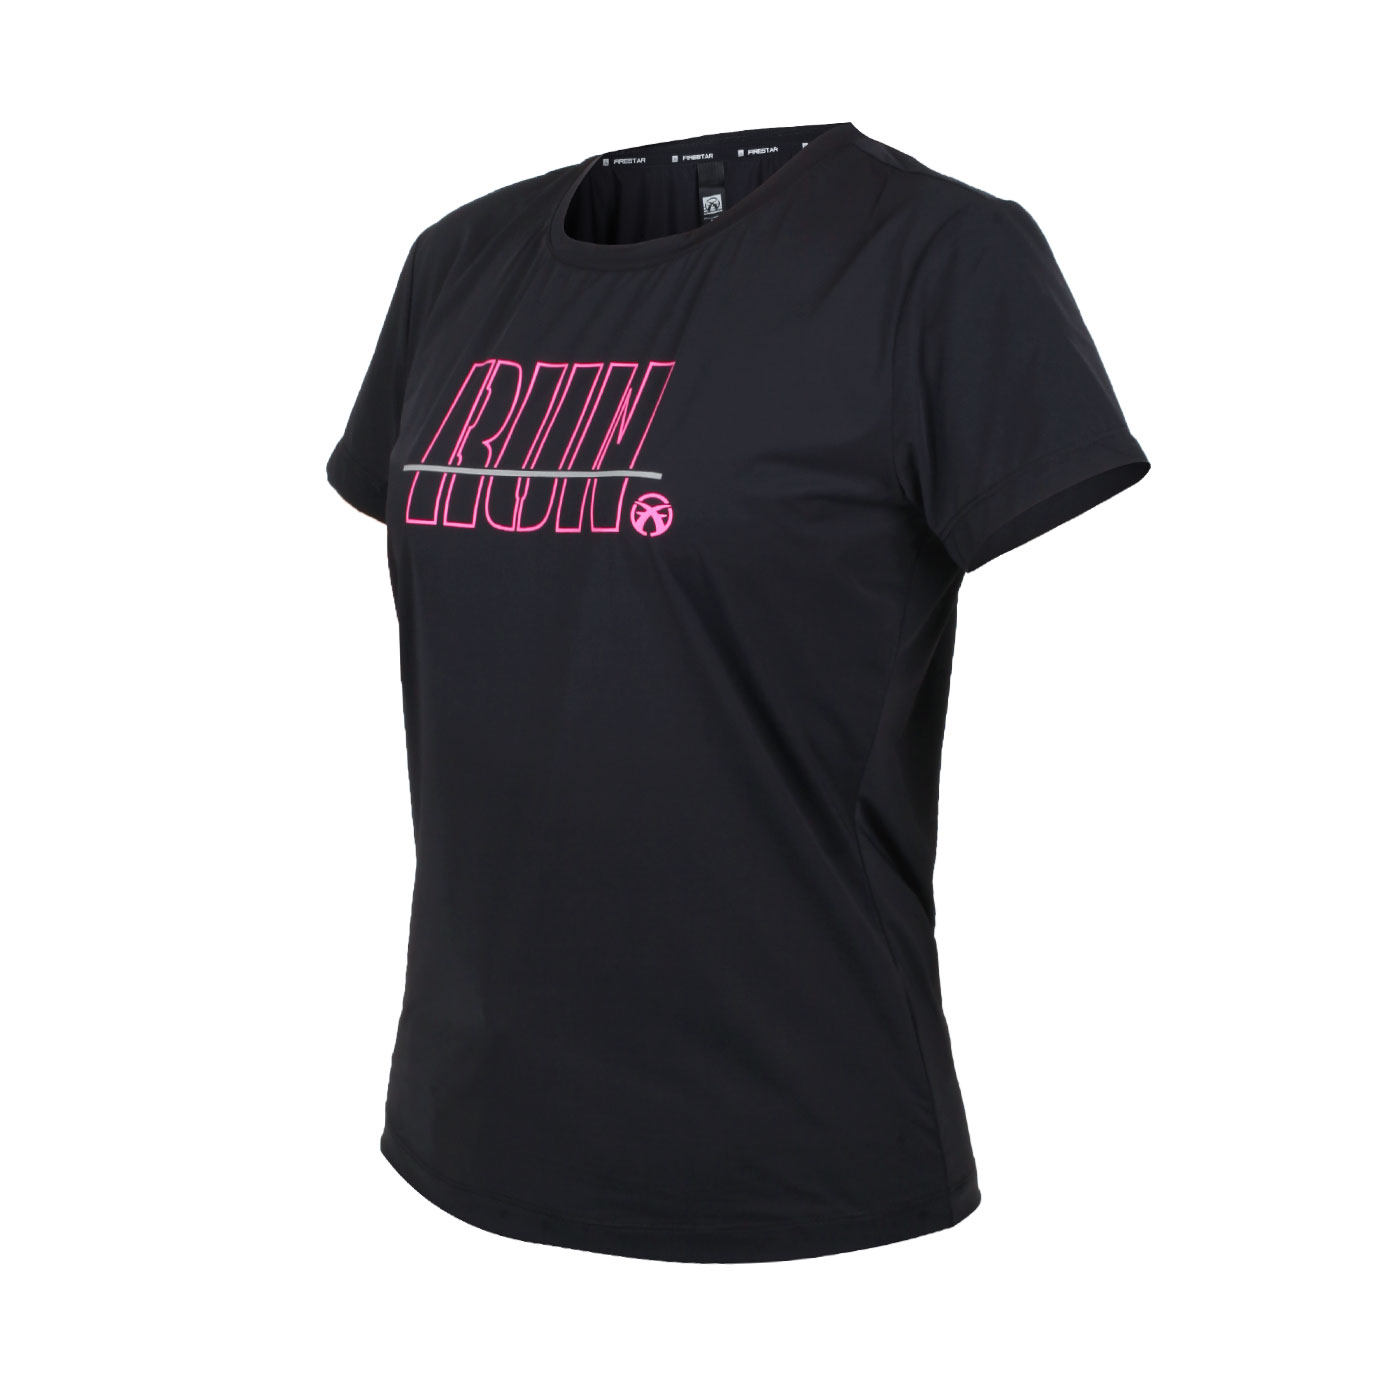 FIRESTAR 女款彈性印花短袖T恤 DL265-10 - 黑桃紅灰